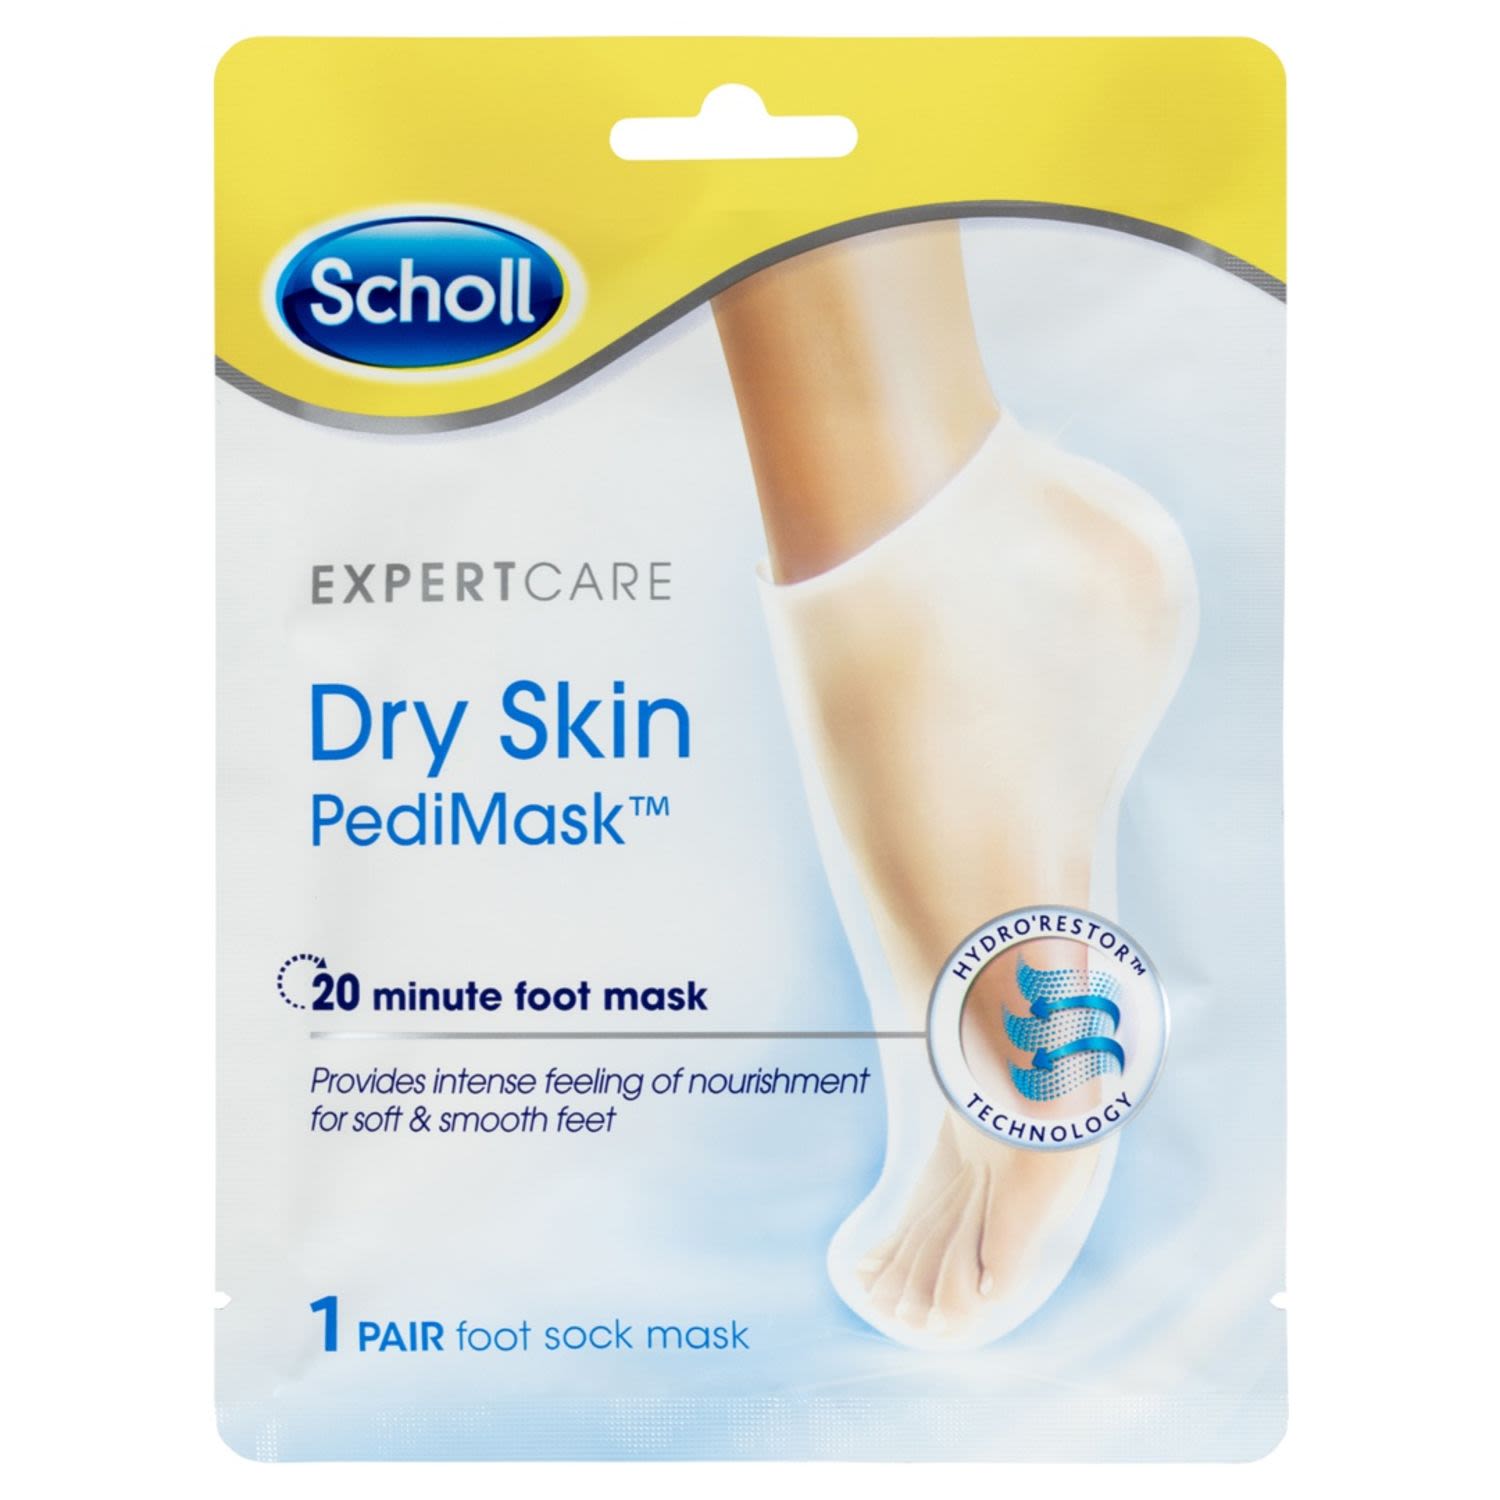 Scholl EXPERTCARE Dry Skin PediMask, 1 Each